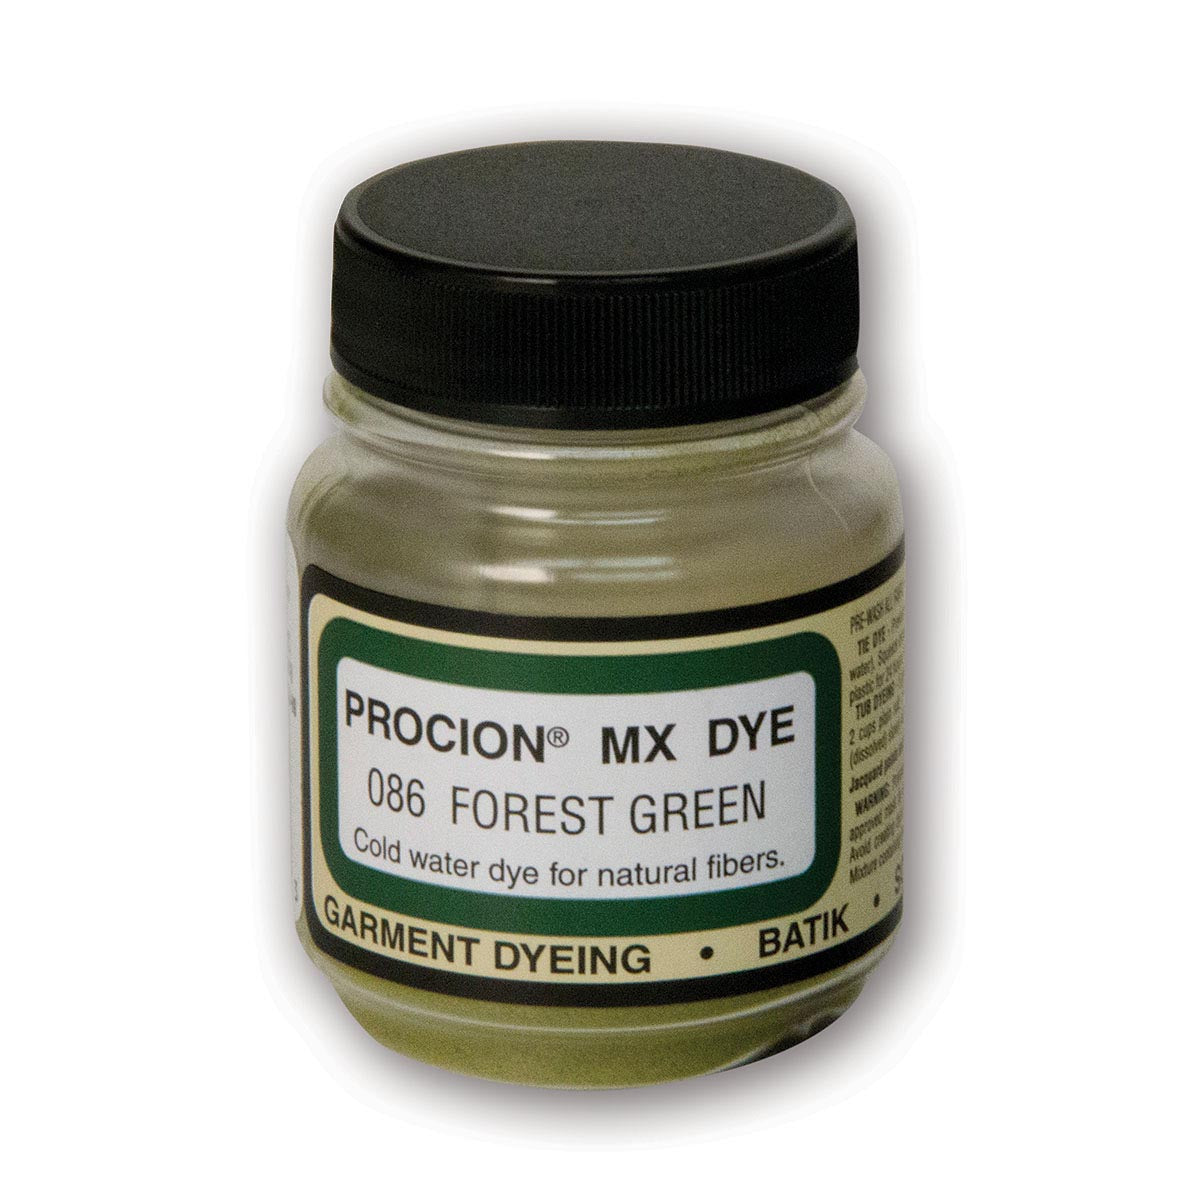 Jacquard - Procion MX Dye - Fabric Textile - Forest Green 086